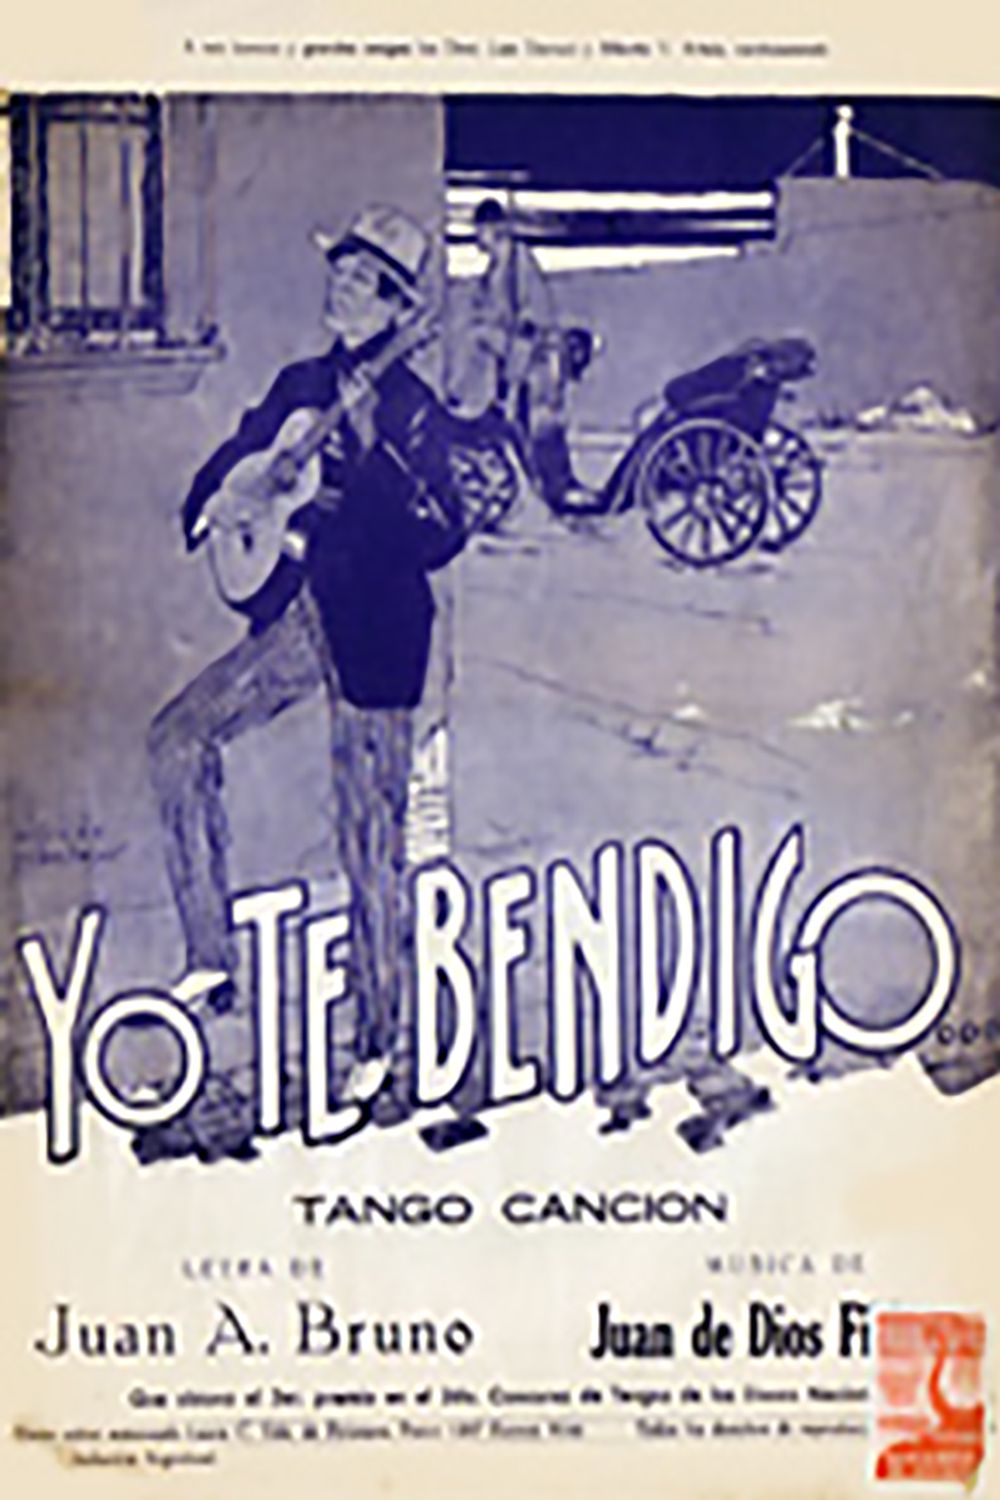 "Yo te bendigo", Argentine Tango music sheet cover.